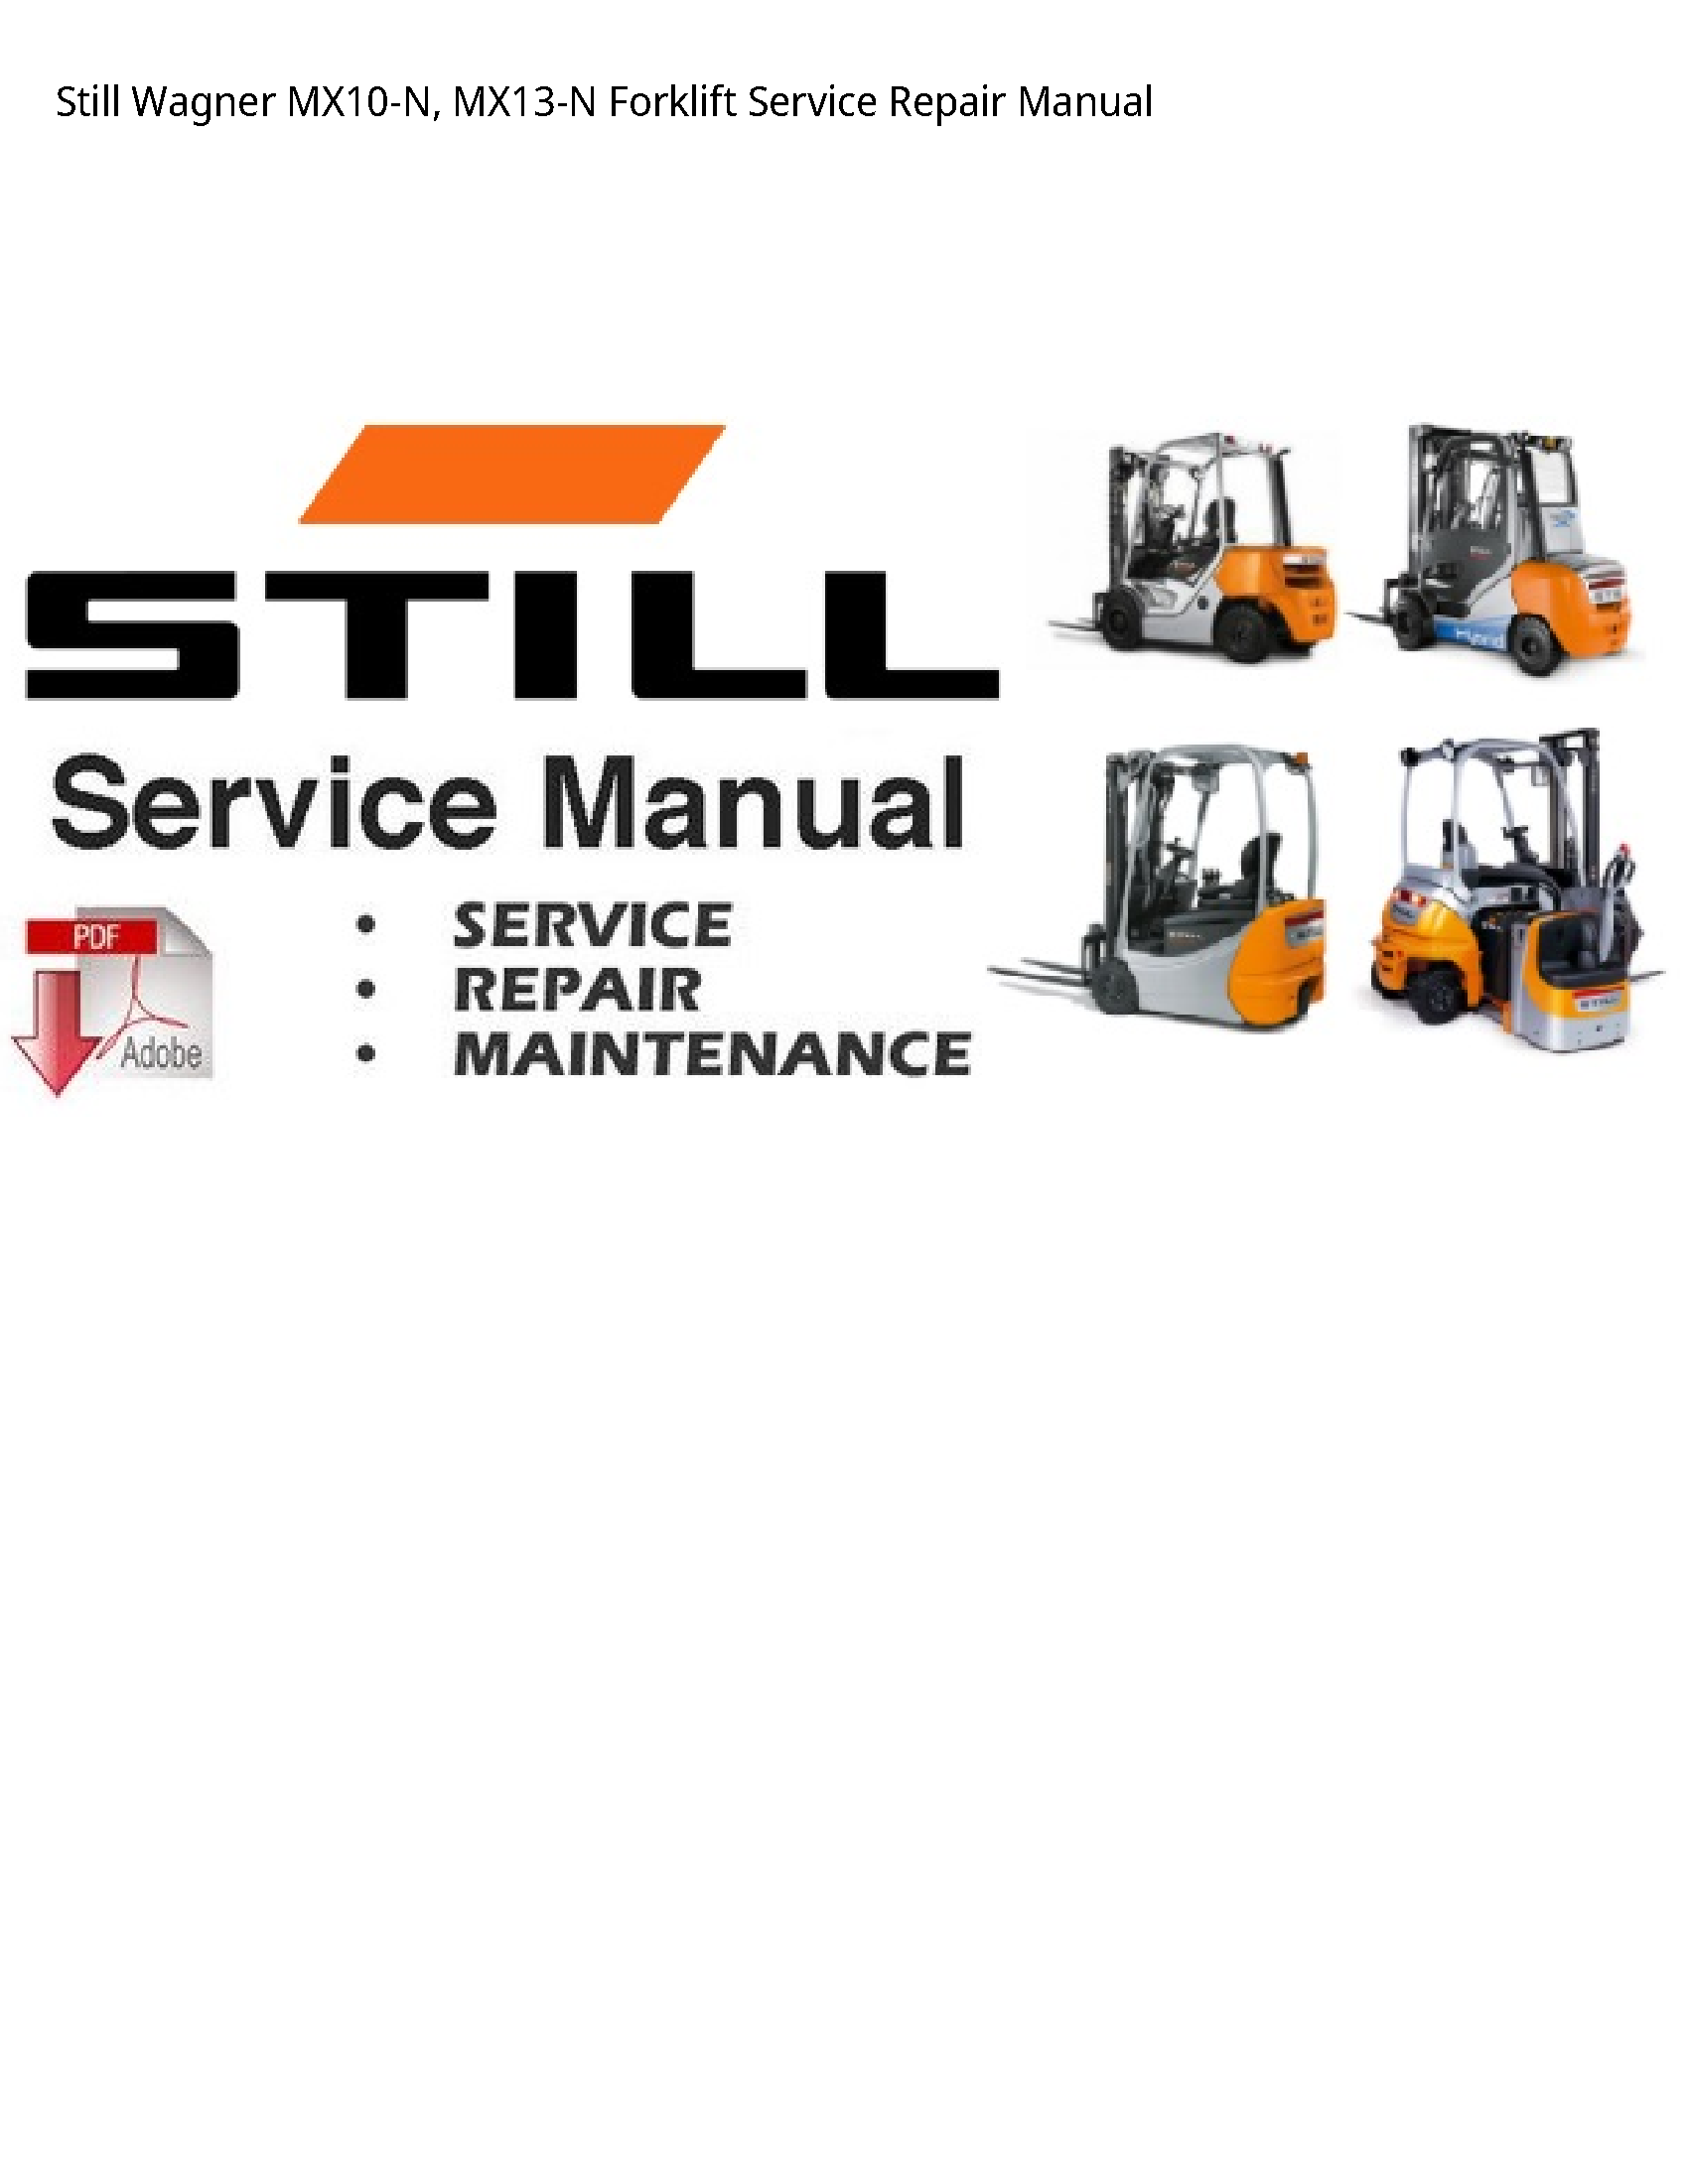 Still MX10-N Wagner Forklift manual